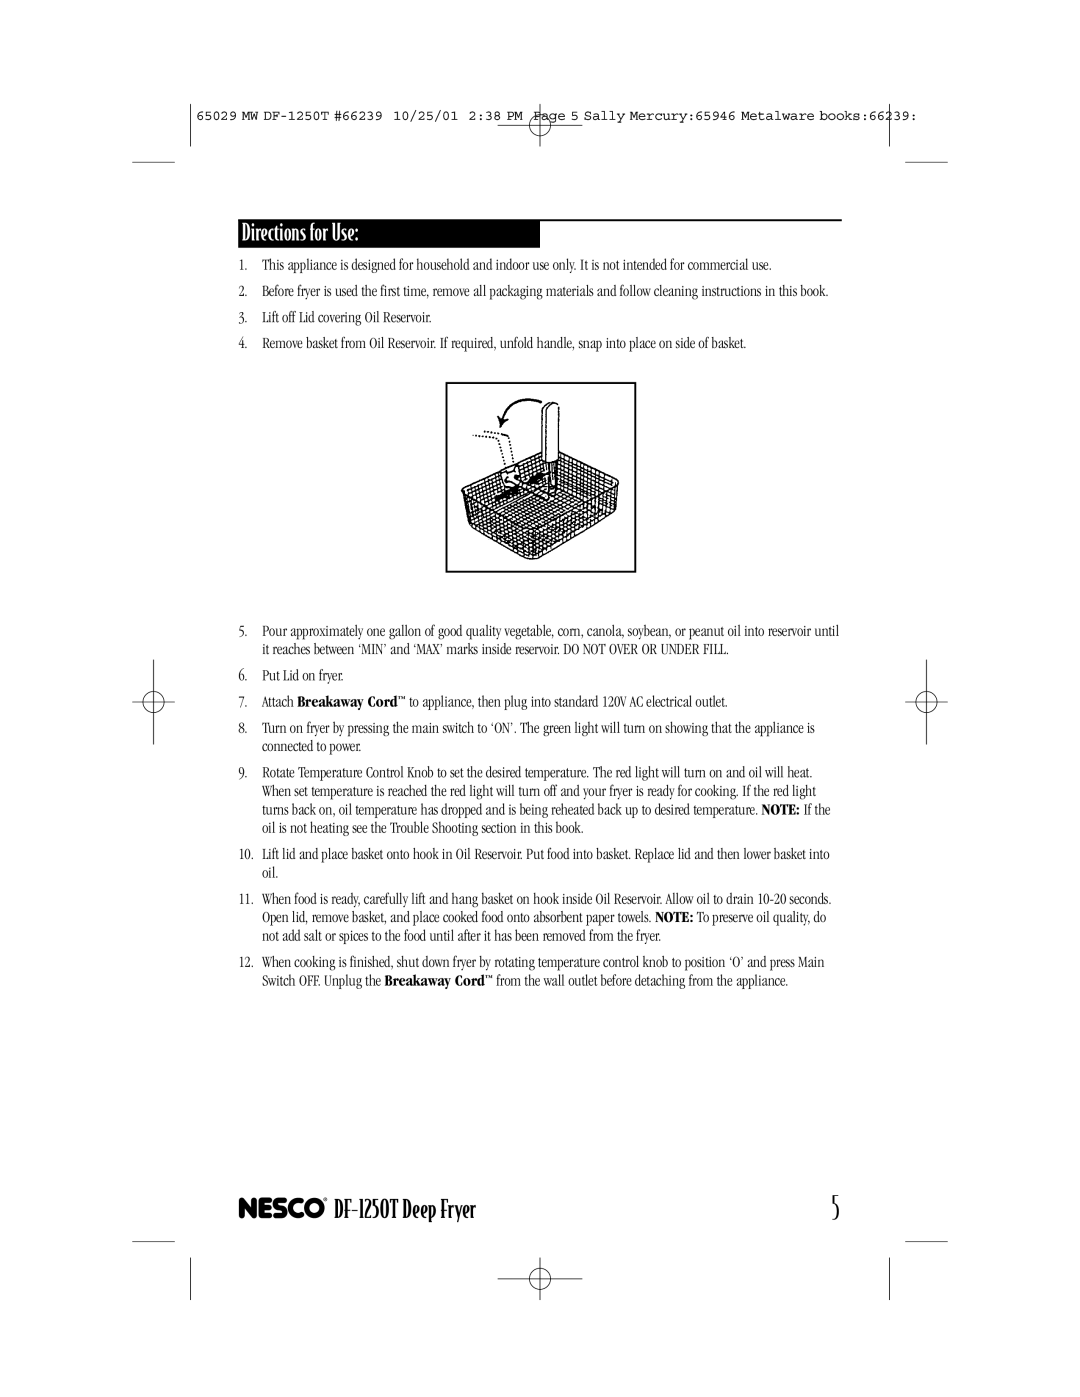 Nesco manual Directions for Use, DF-1250TDeep Fryer 